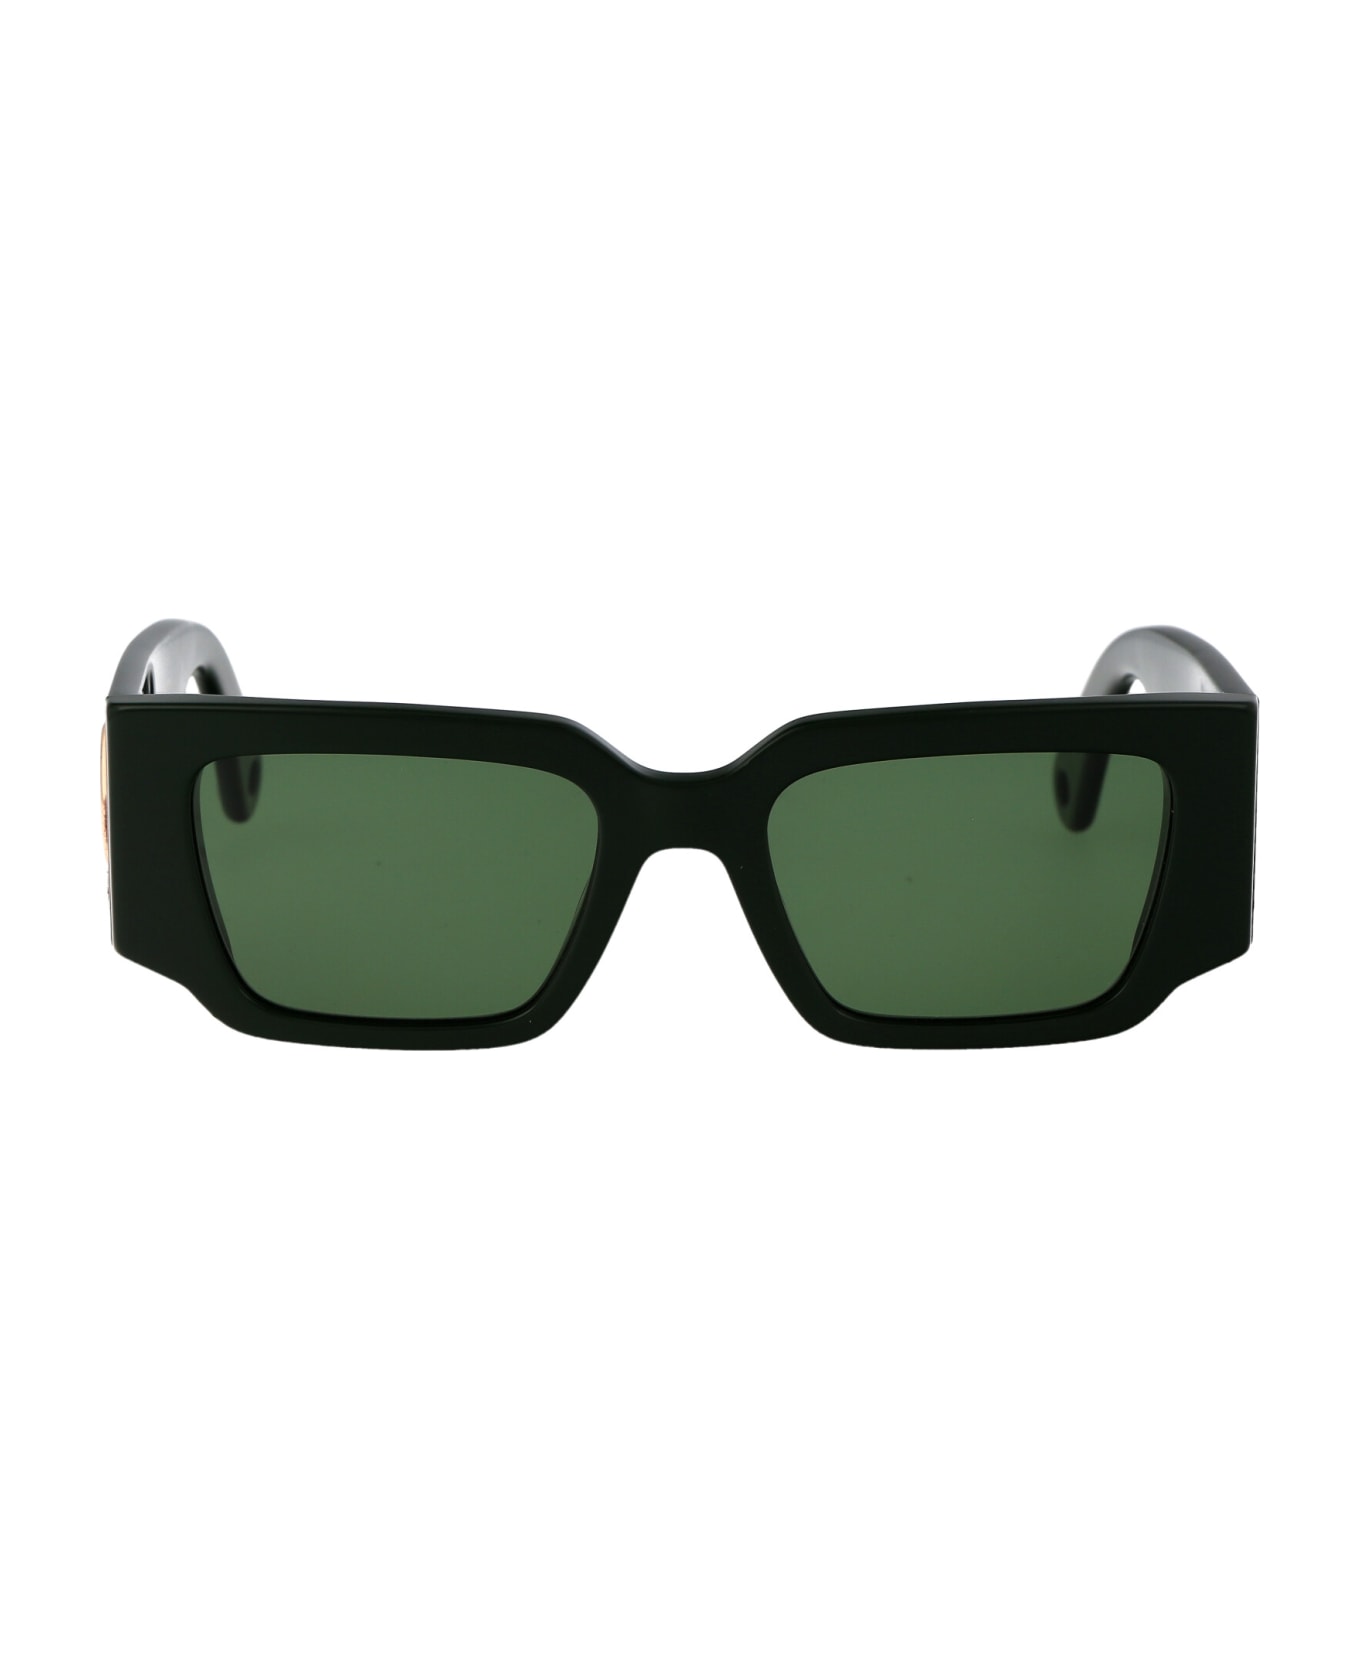 Lanvin Lnv639s Sunglasses - 318 DARK GREEN サングラス